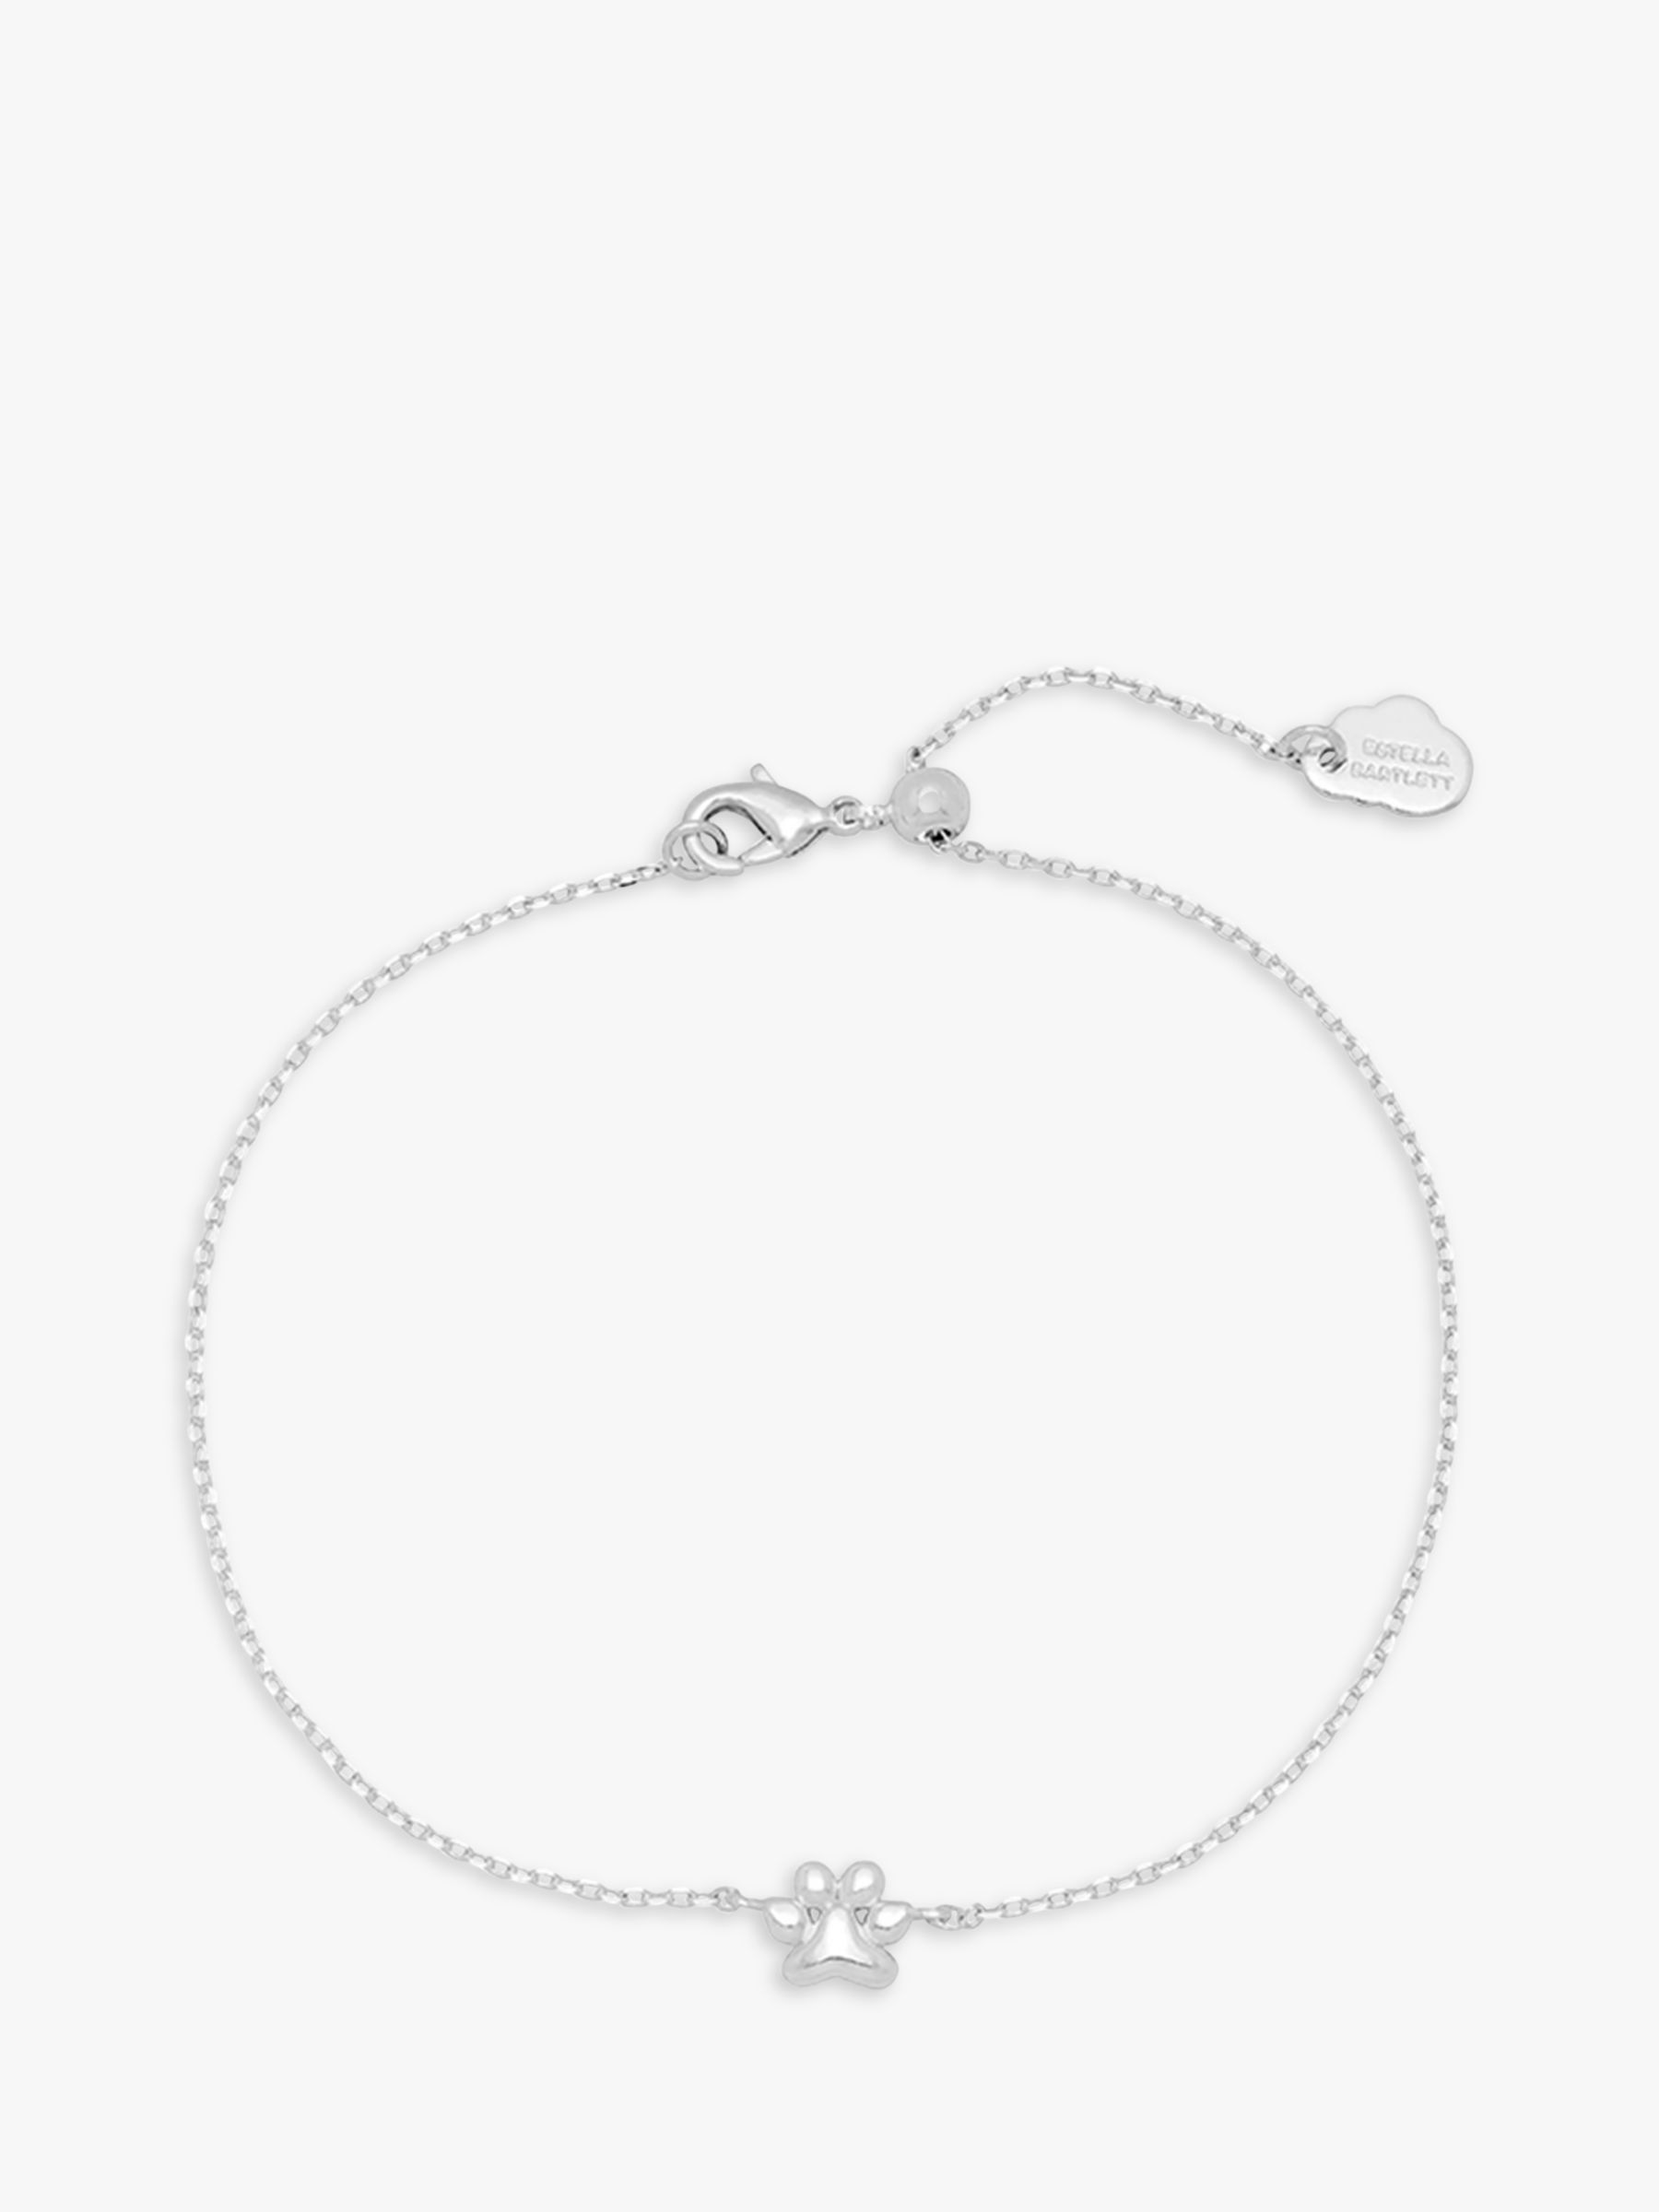 Silver Paw Bartlett Bracelet, Estella Charm